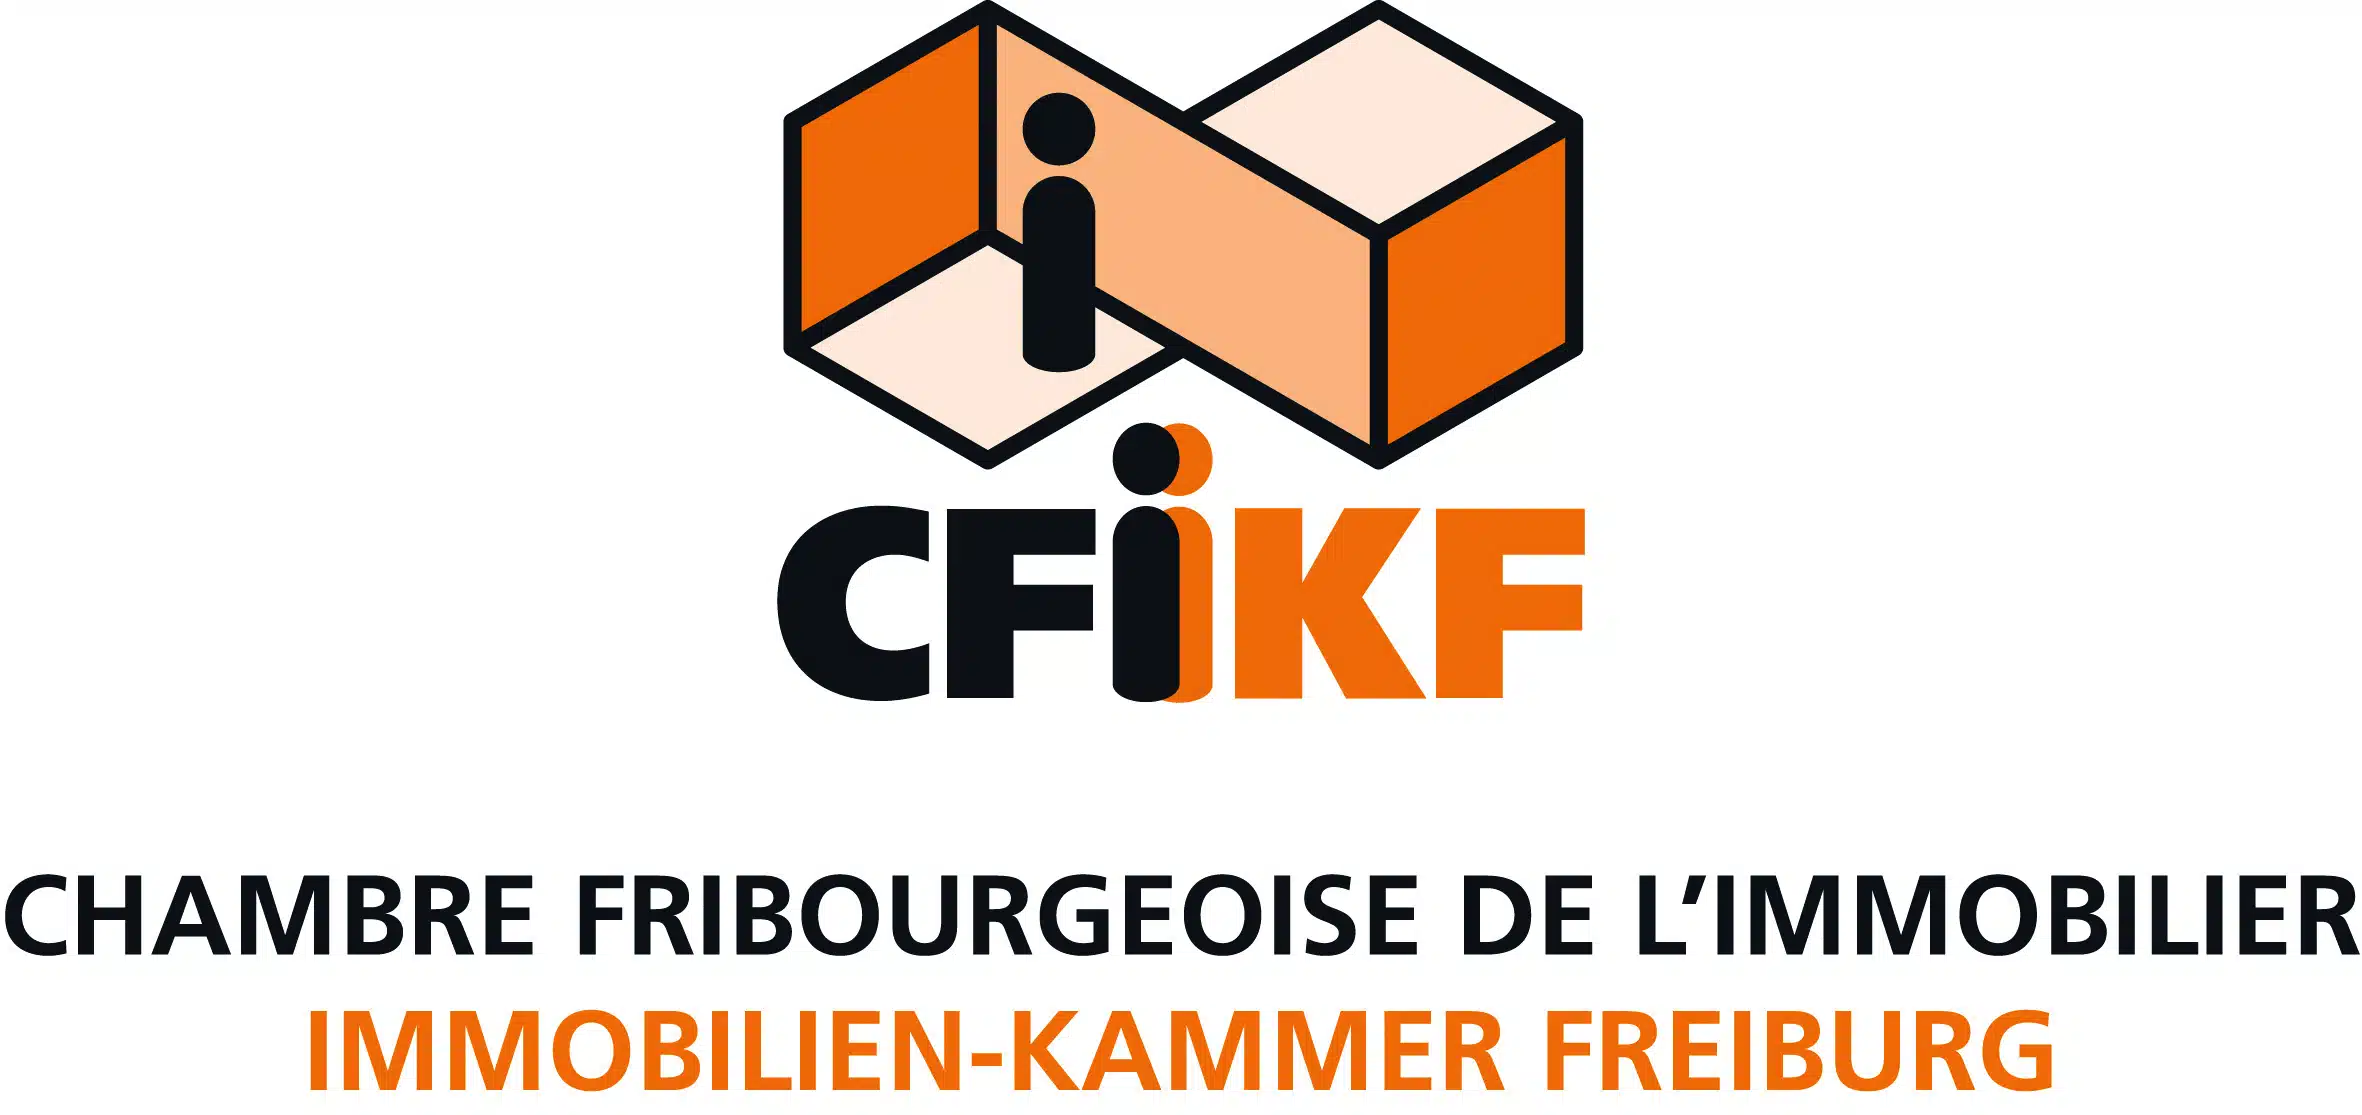 Nouveau Logo CFI RVB 2016 2 cmjn 1